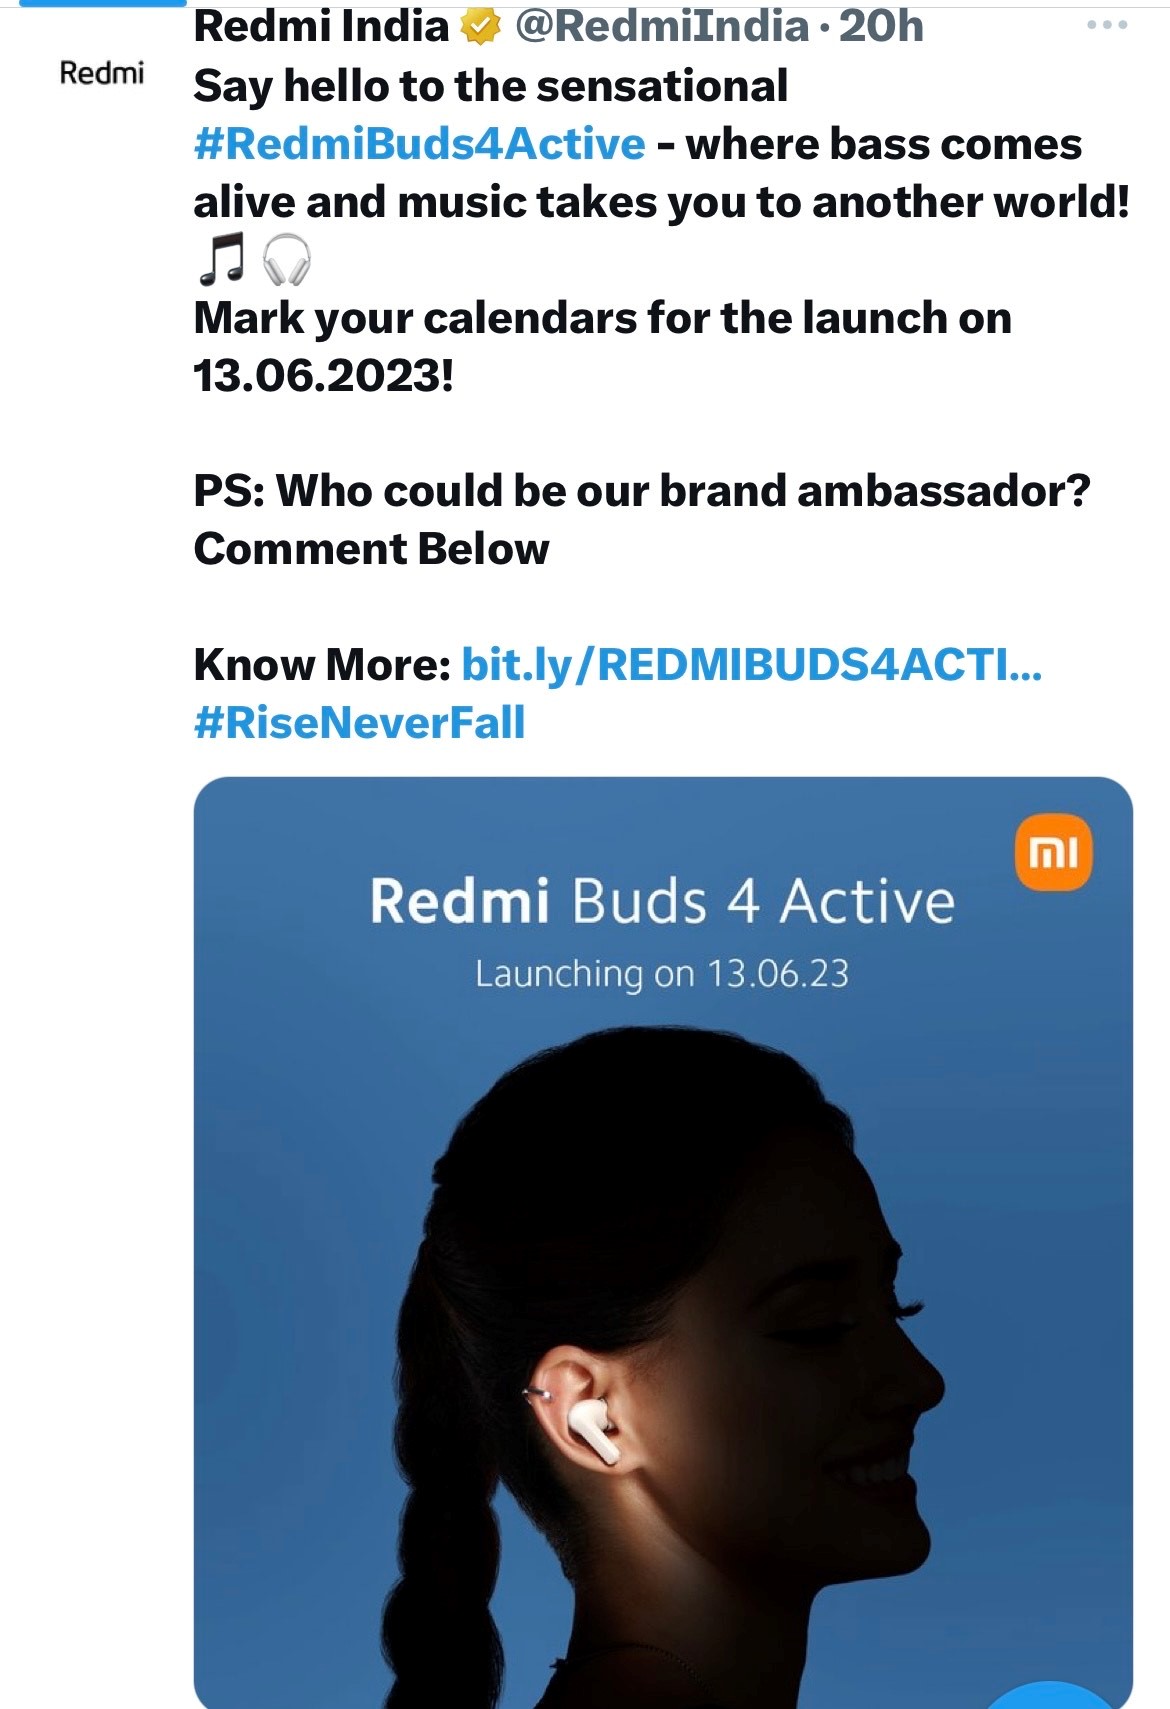 Redmi Buds 4 Active 